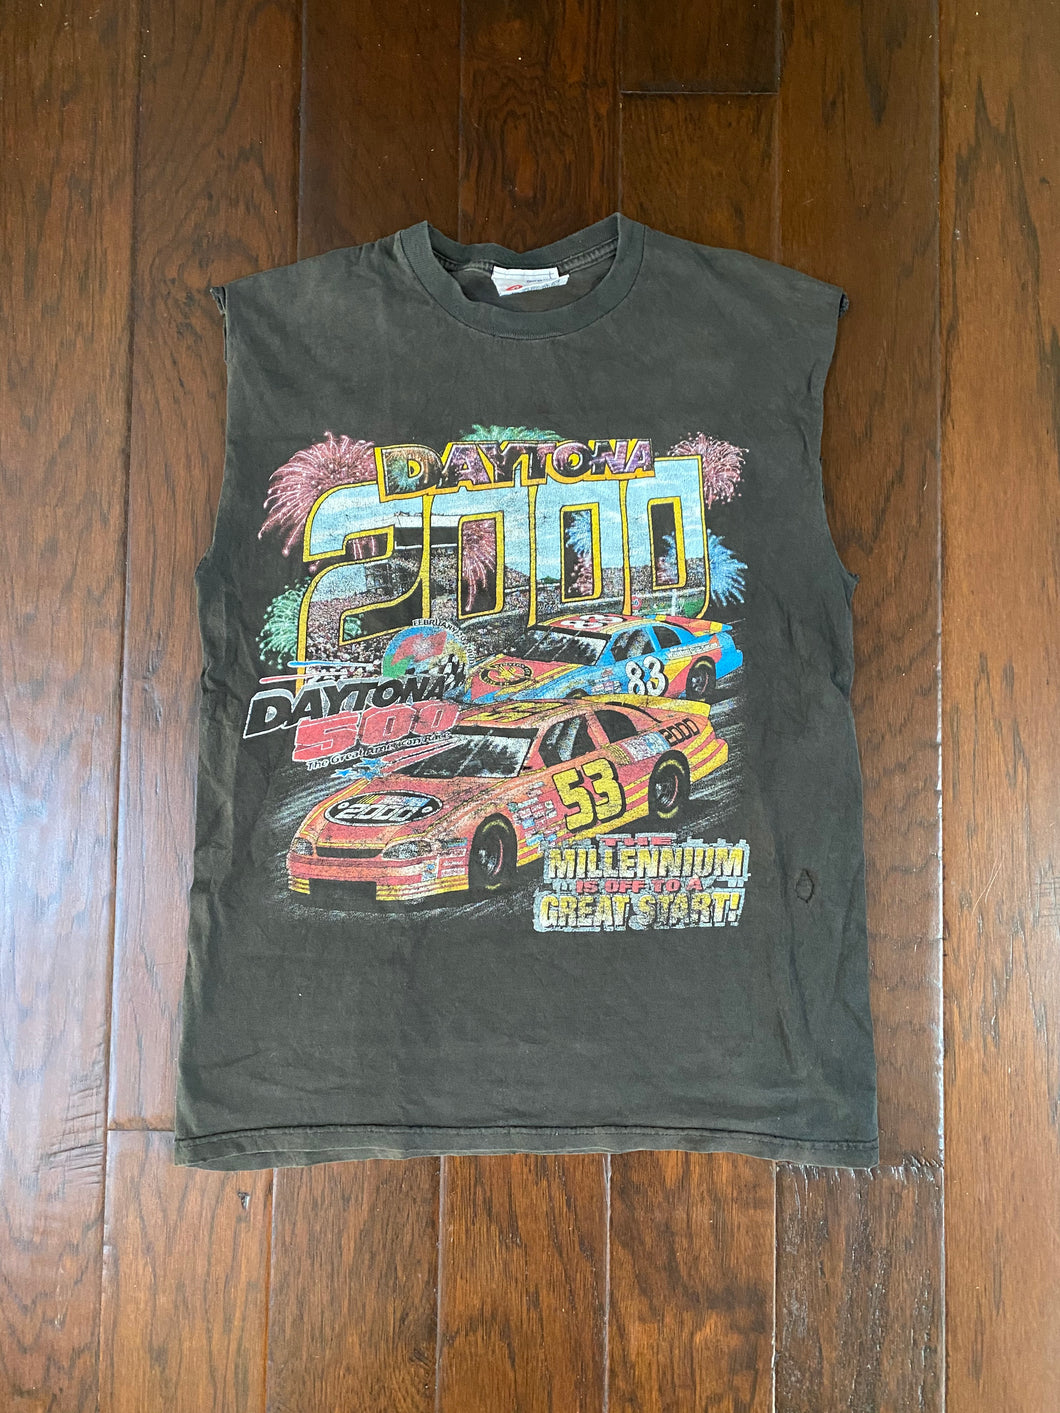 Dayton 500 “February 20, 2000” NASCAR Winston Cup Series Vintage Distressed Sleeveless T-shirt